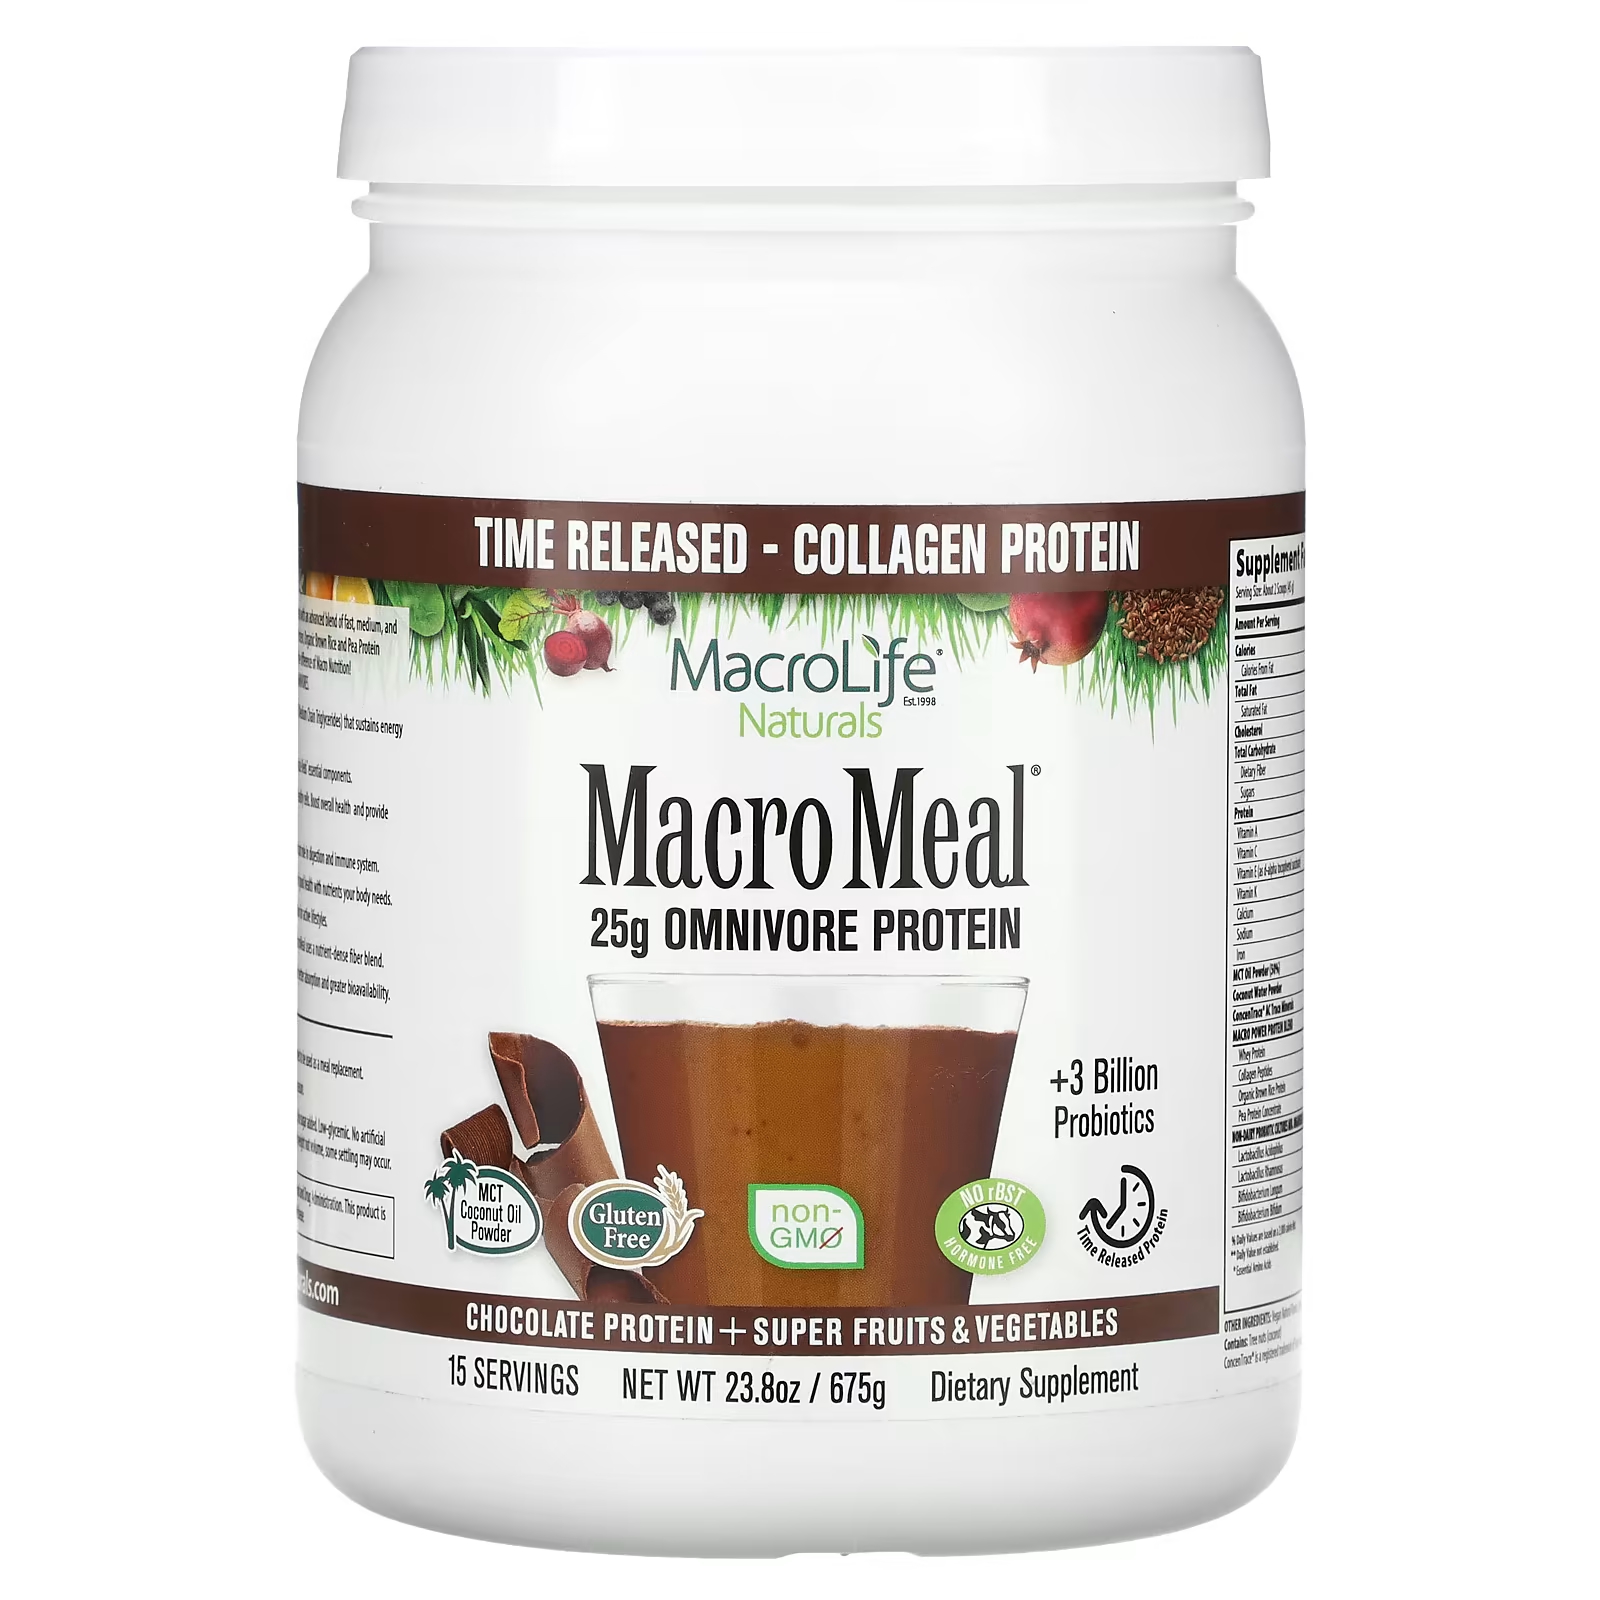 Пищевая добавка Macrolife Naturals MacroMeal Protein + Super Fruits & Vegetables со вкусом шоколада, 675 г